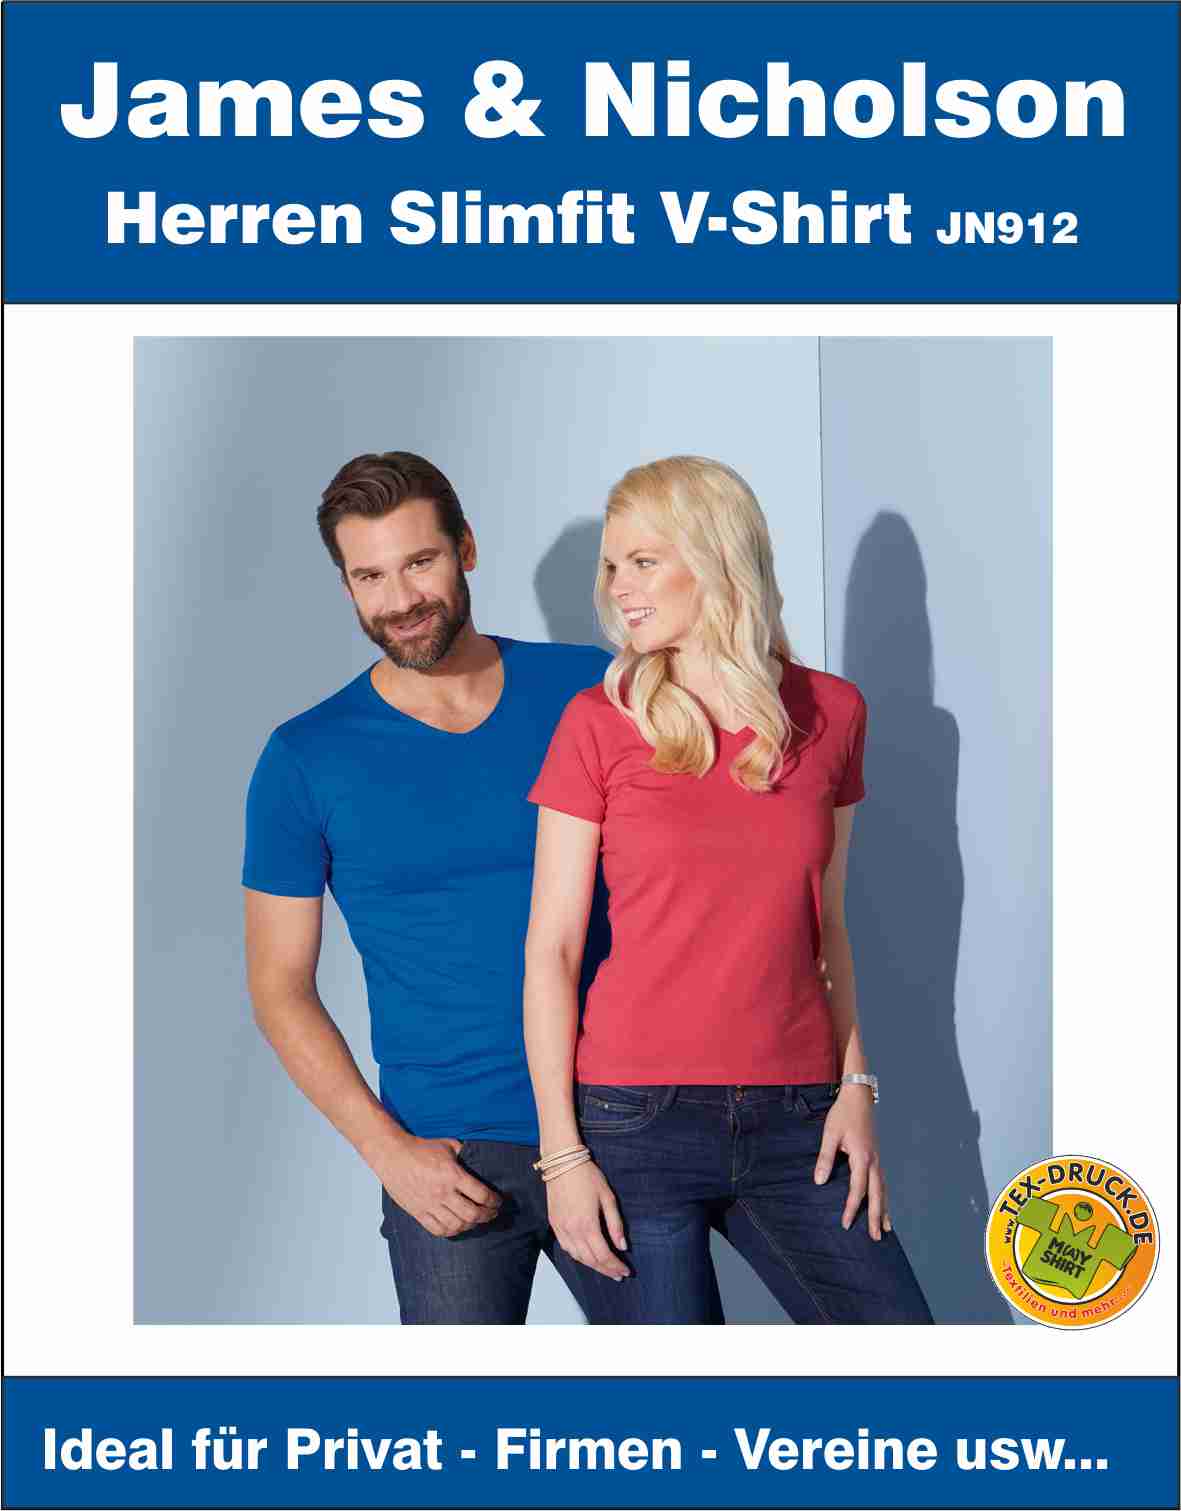 https://tex-druck.de/products/james-nicholson-herren-slimfit-v-shirt